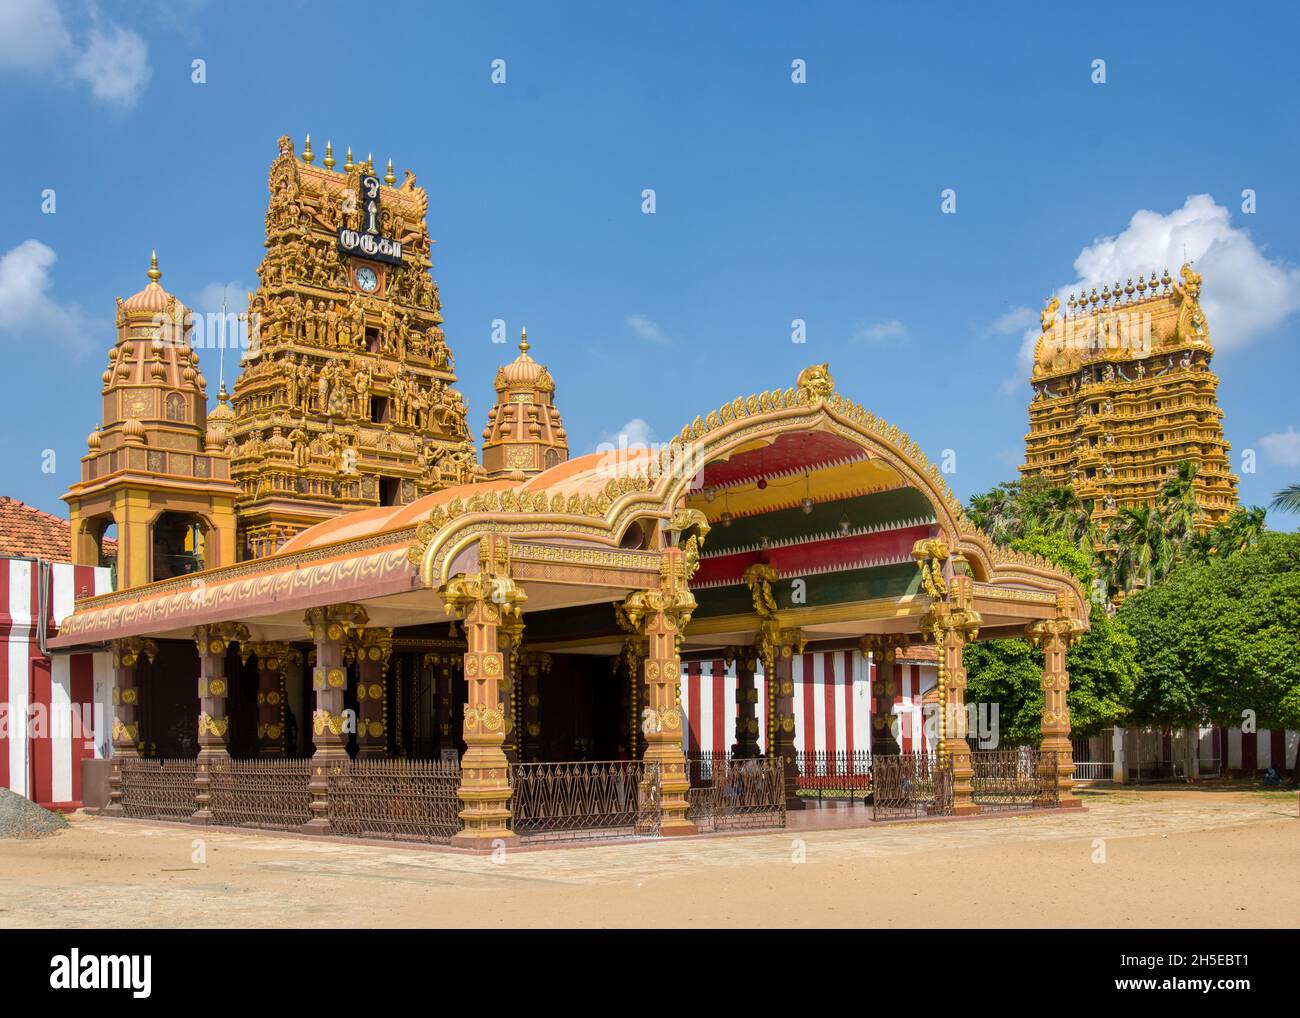 jaffna sri lanka 12th january 2020 the beautiful nallur kandaswamy kovil temple is an important place of worship for local hindus 2H5EBT1